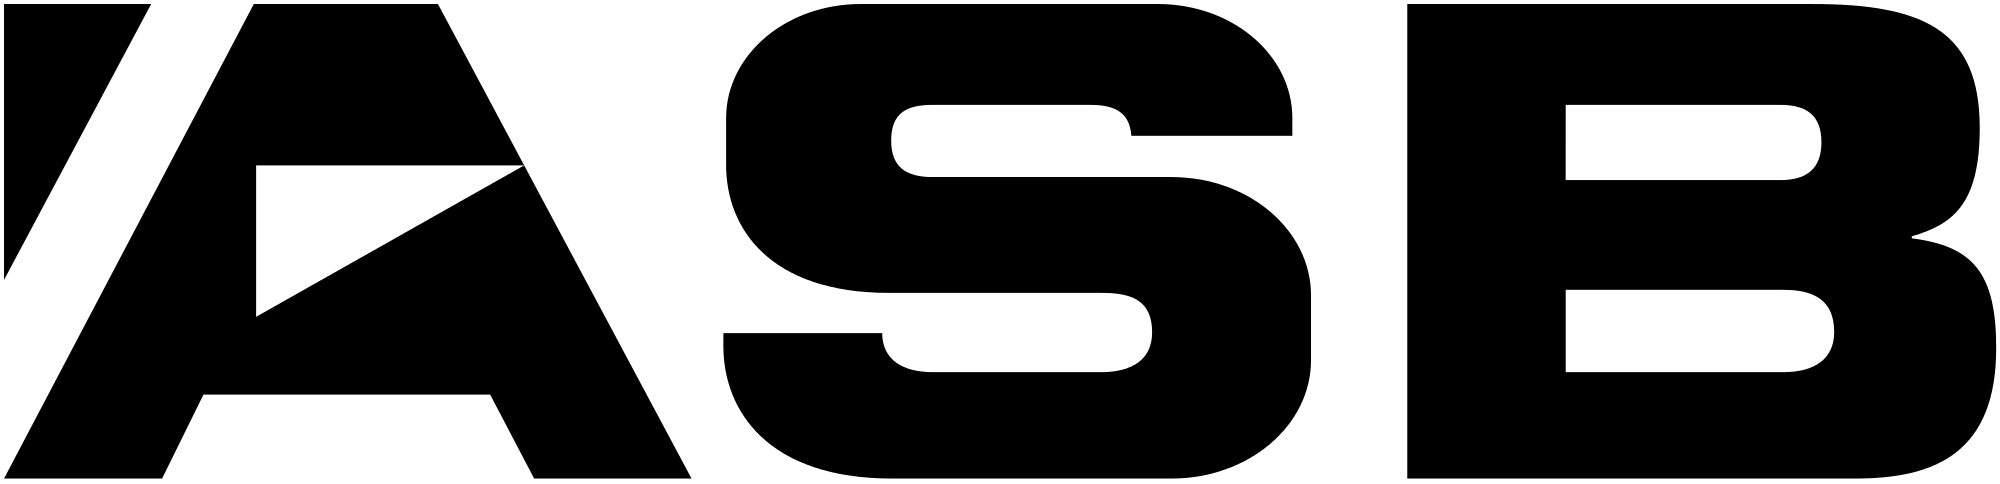 2000px-ASB_Bank_Logo.svg.png